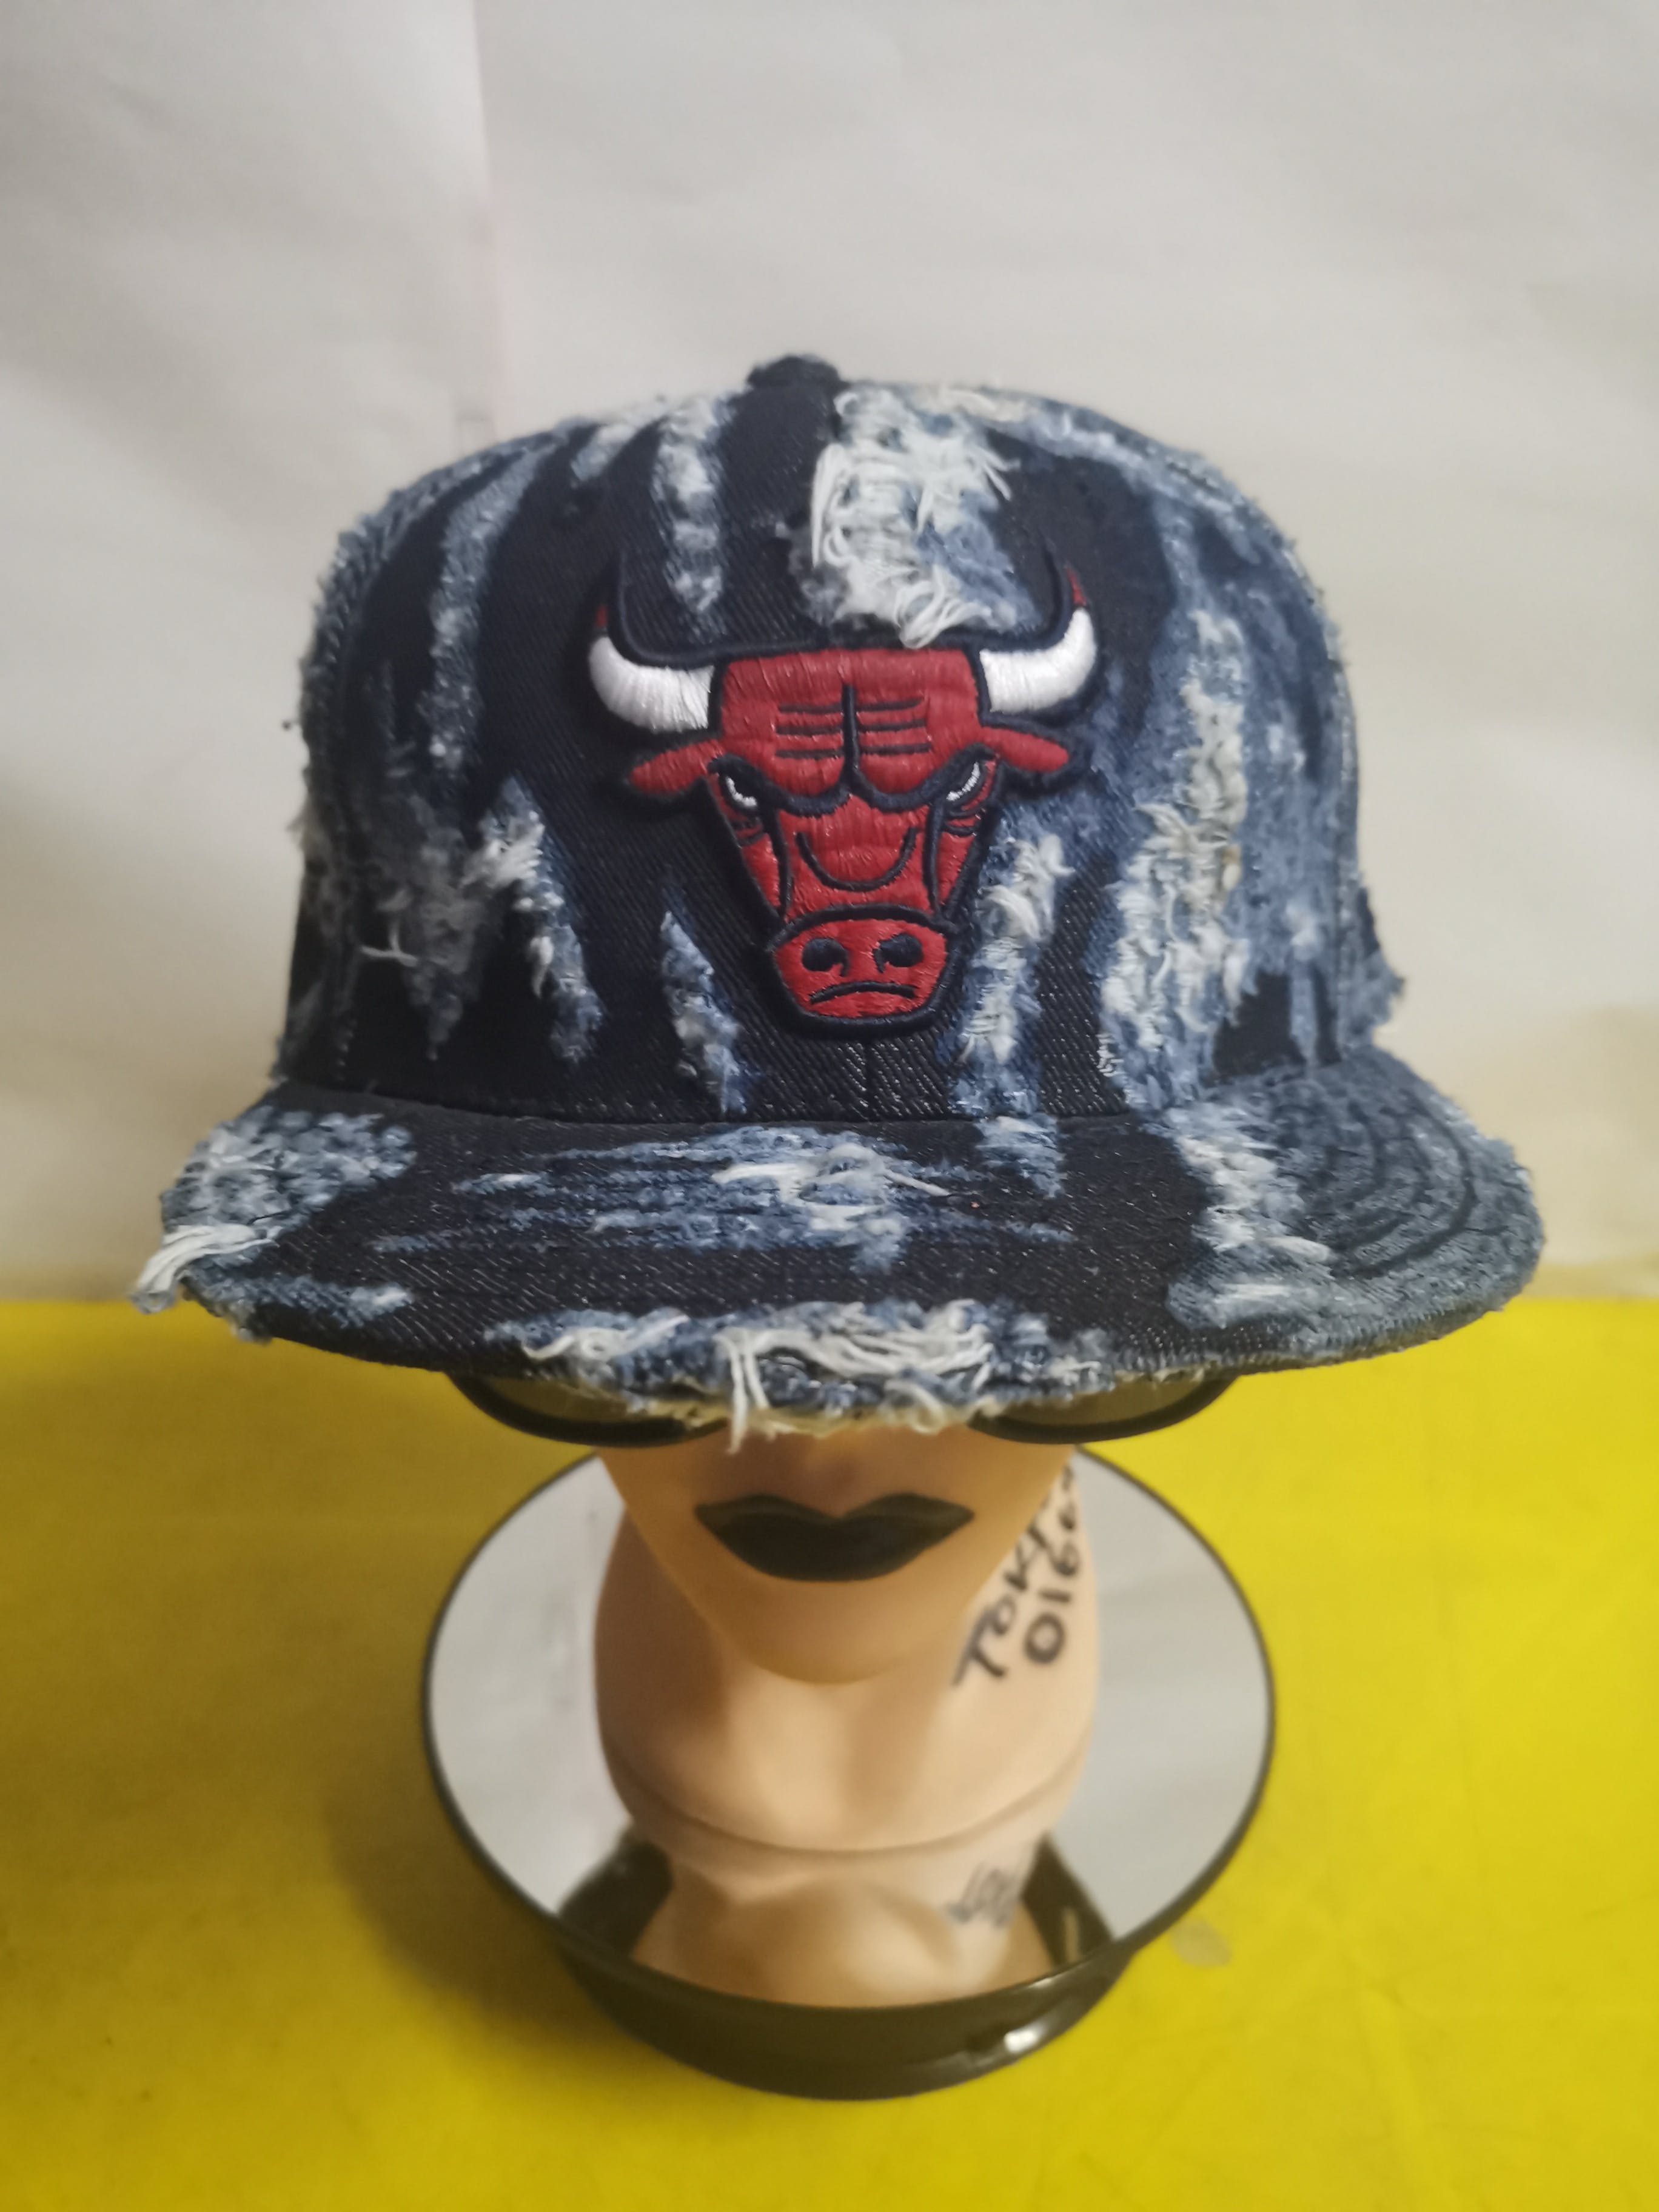 🔥FINAL PRICE DROP🔥Reebox Denim Hat x NBA x Chicago Bulls - 1